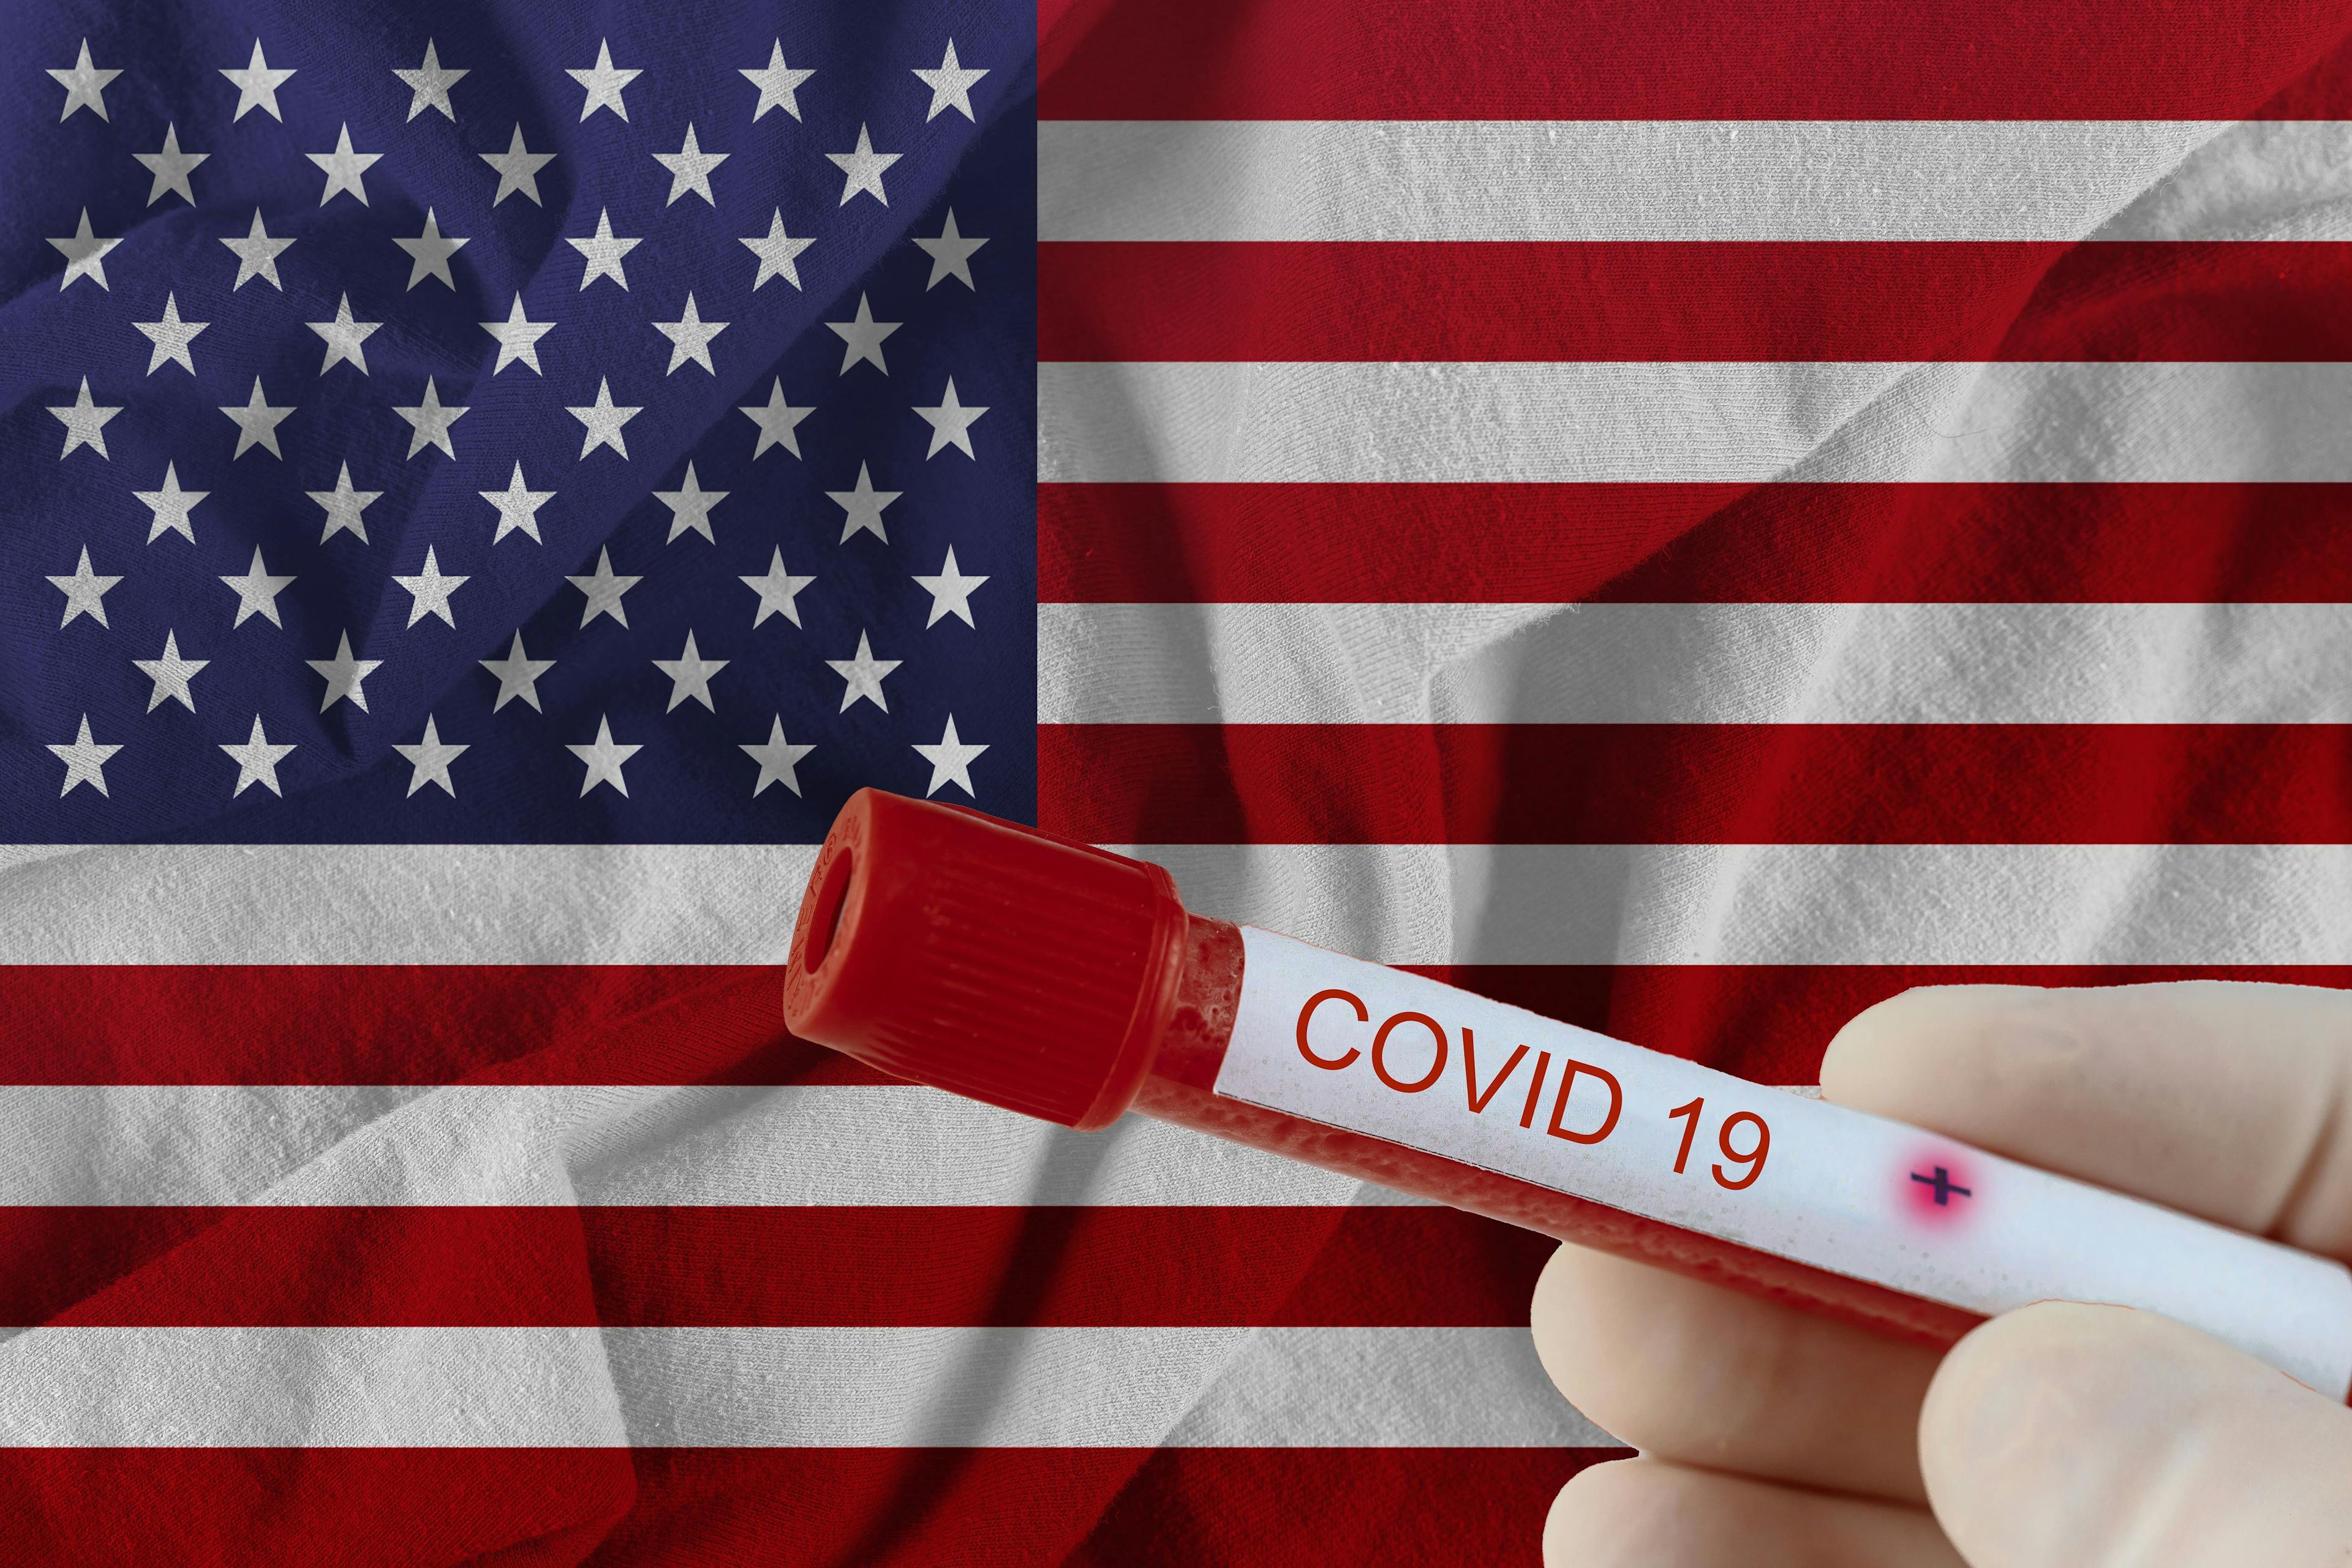 CDC: COVID-19 surface transmission rare